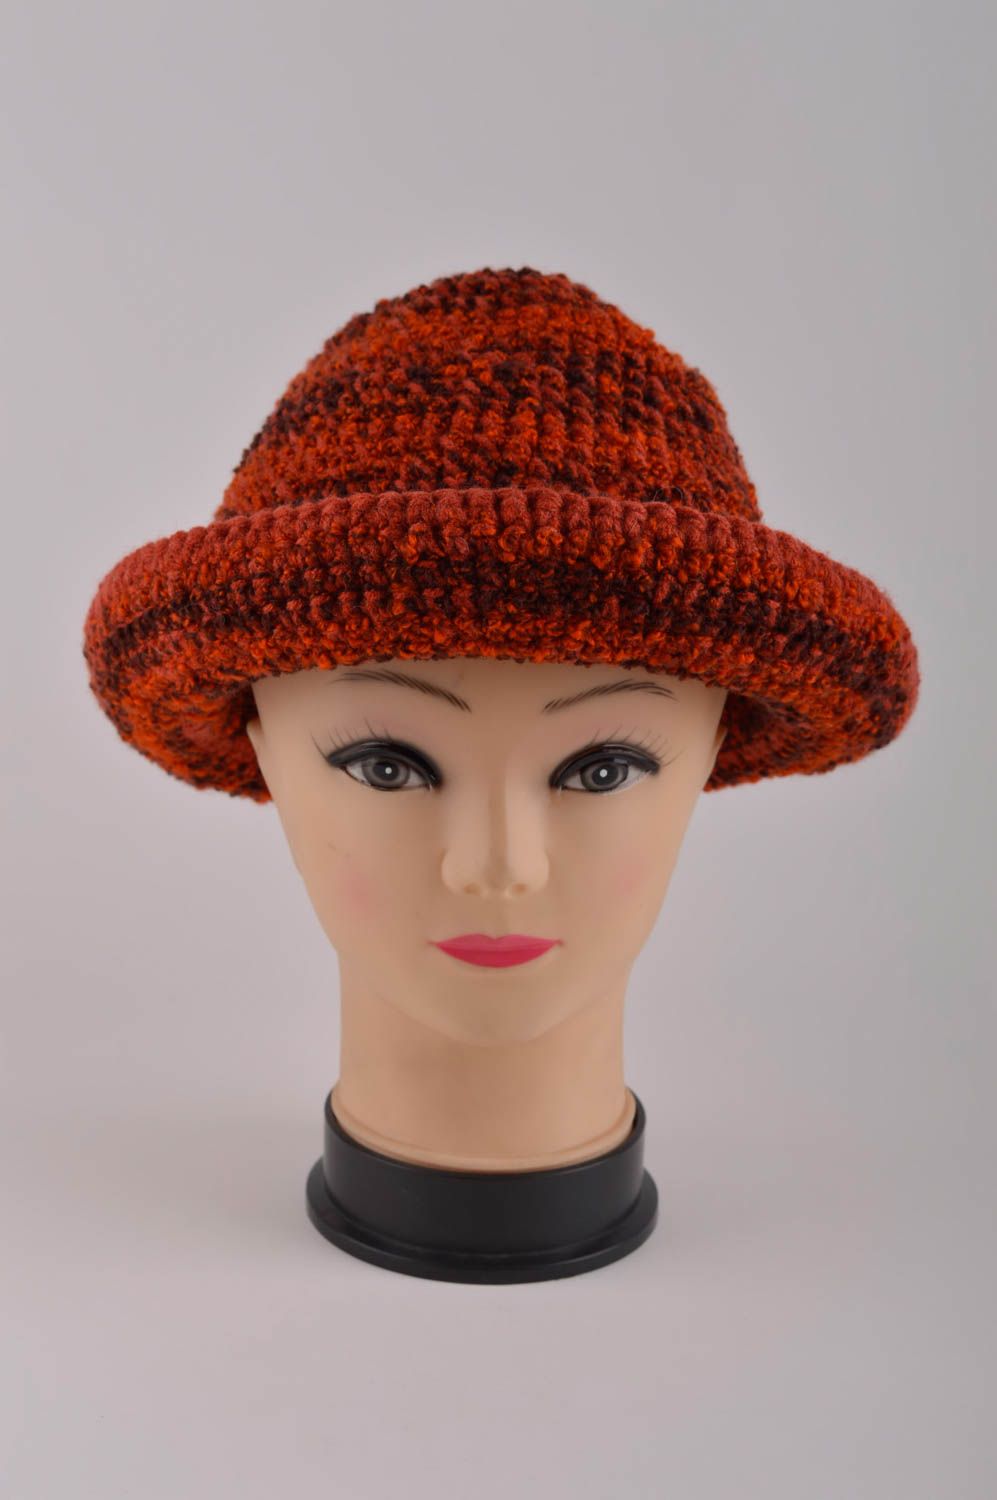 Handmade crochet hat womens hat accessories for women designer hats gift ideas photo 3